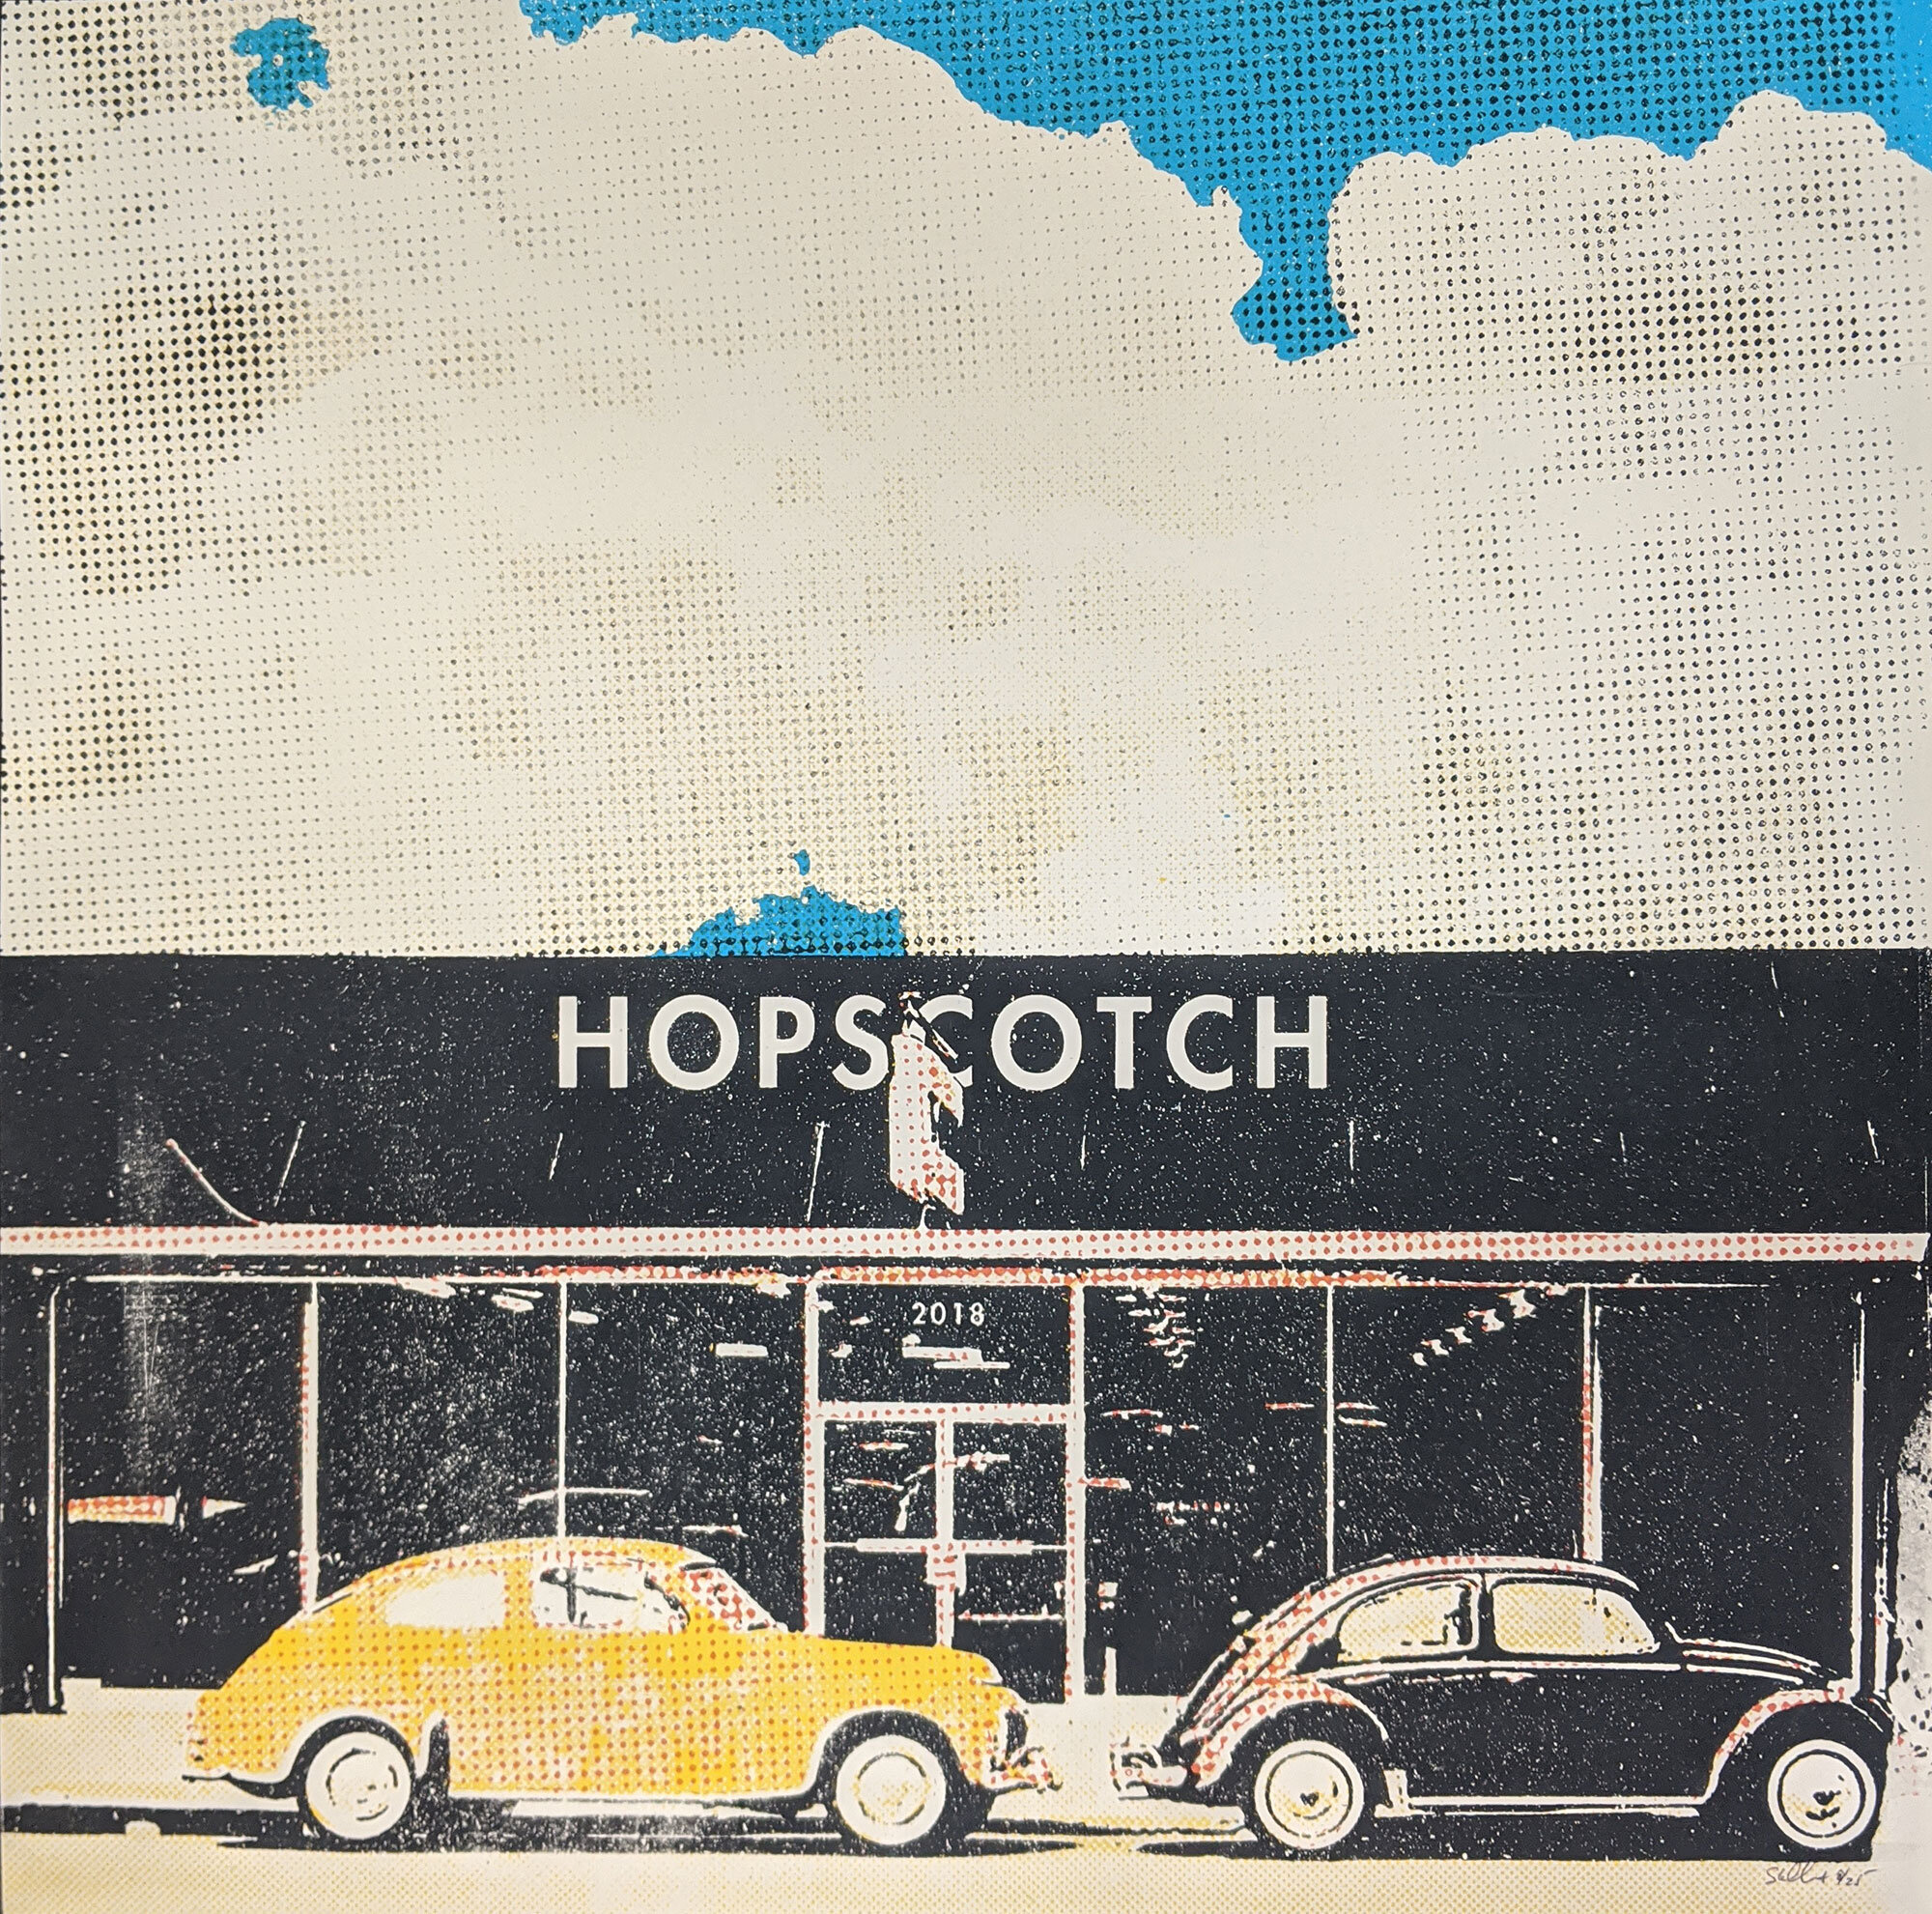 Hopscotch-2018.jpg